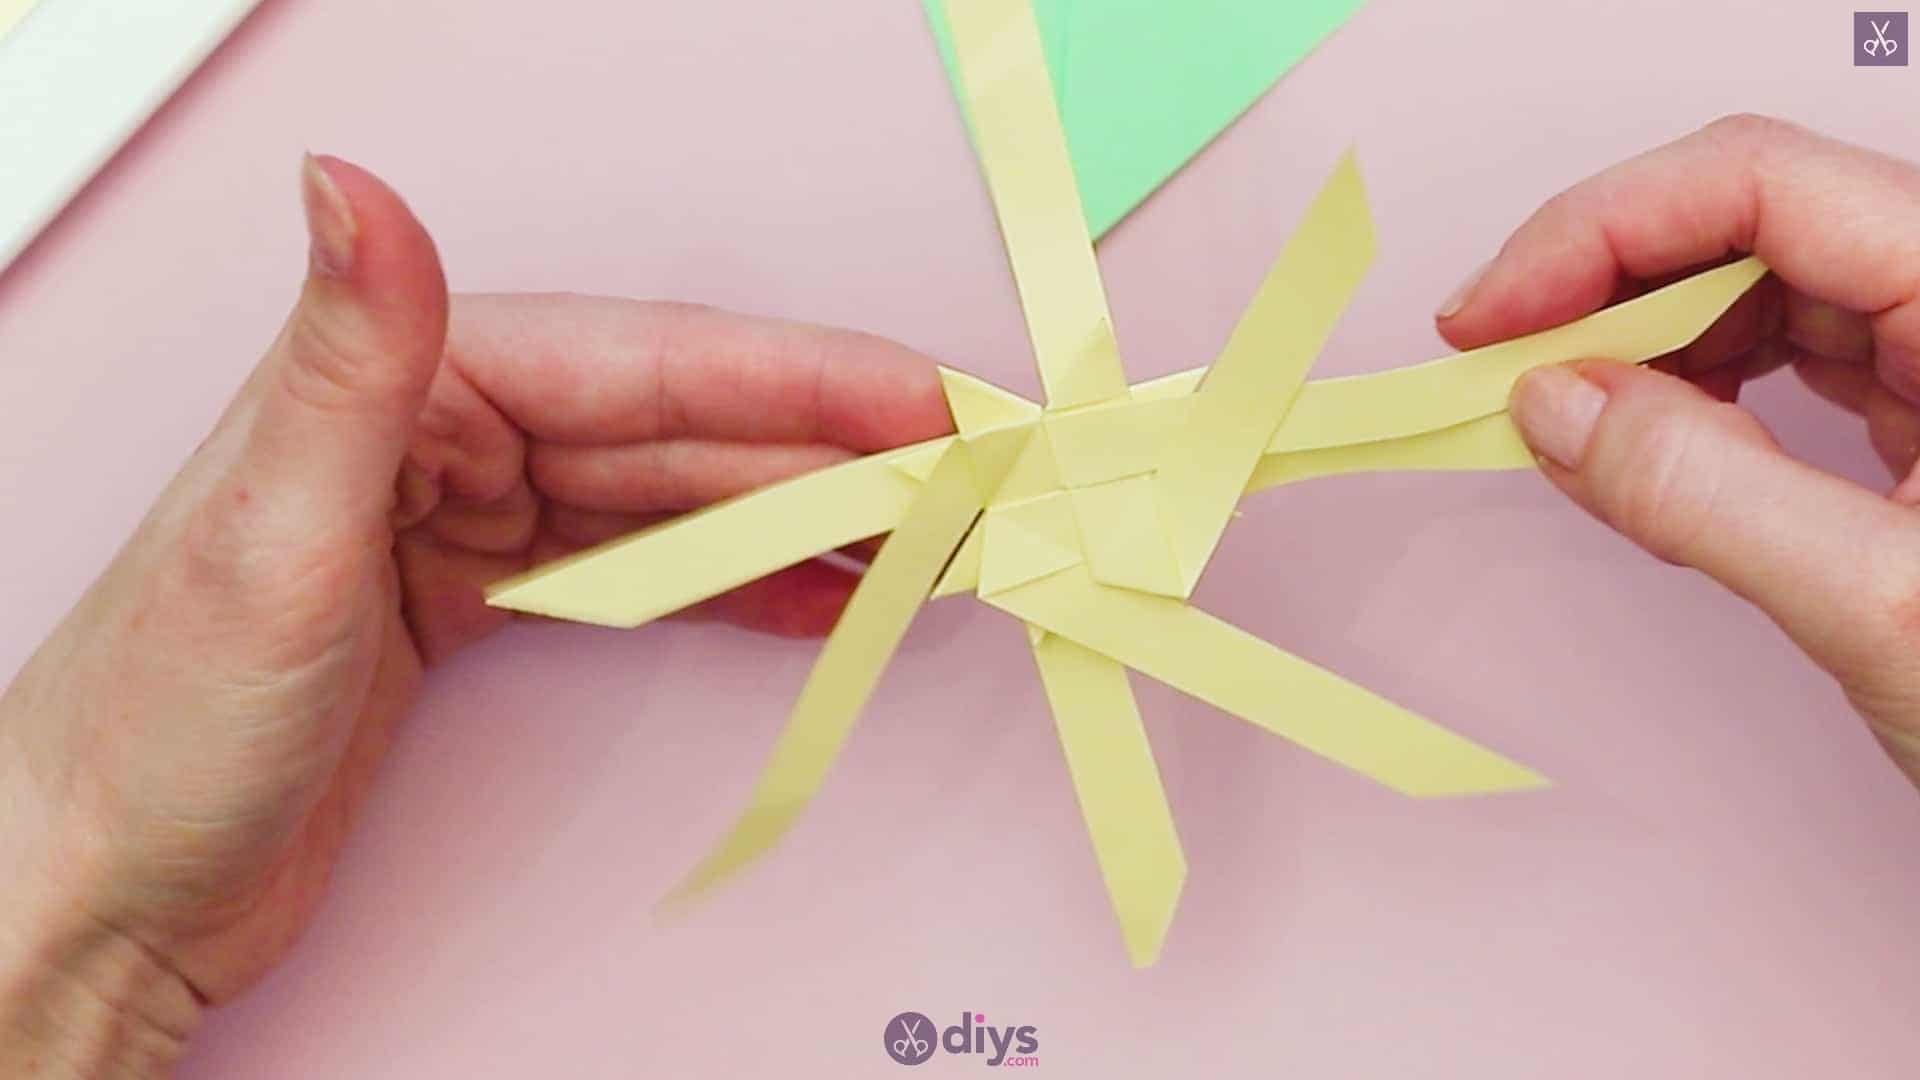 Diy origami flower art step 6b